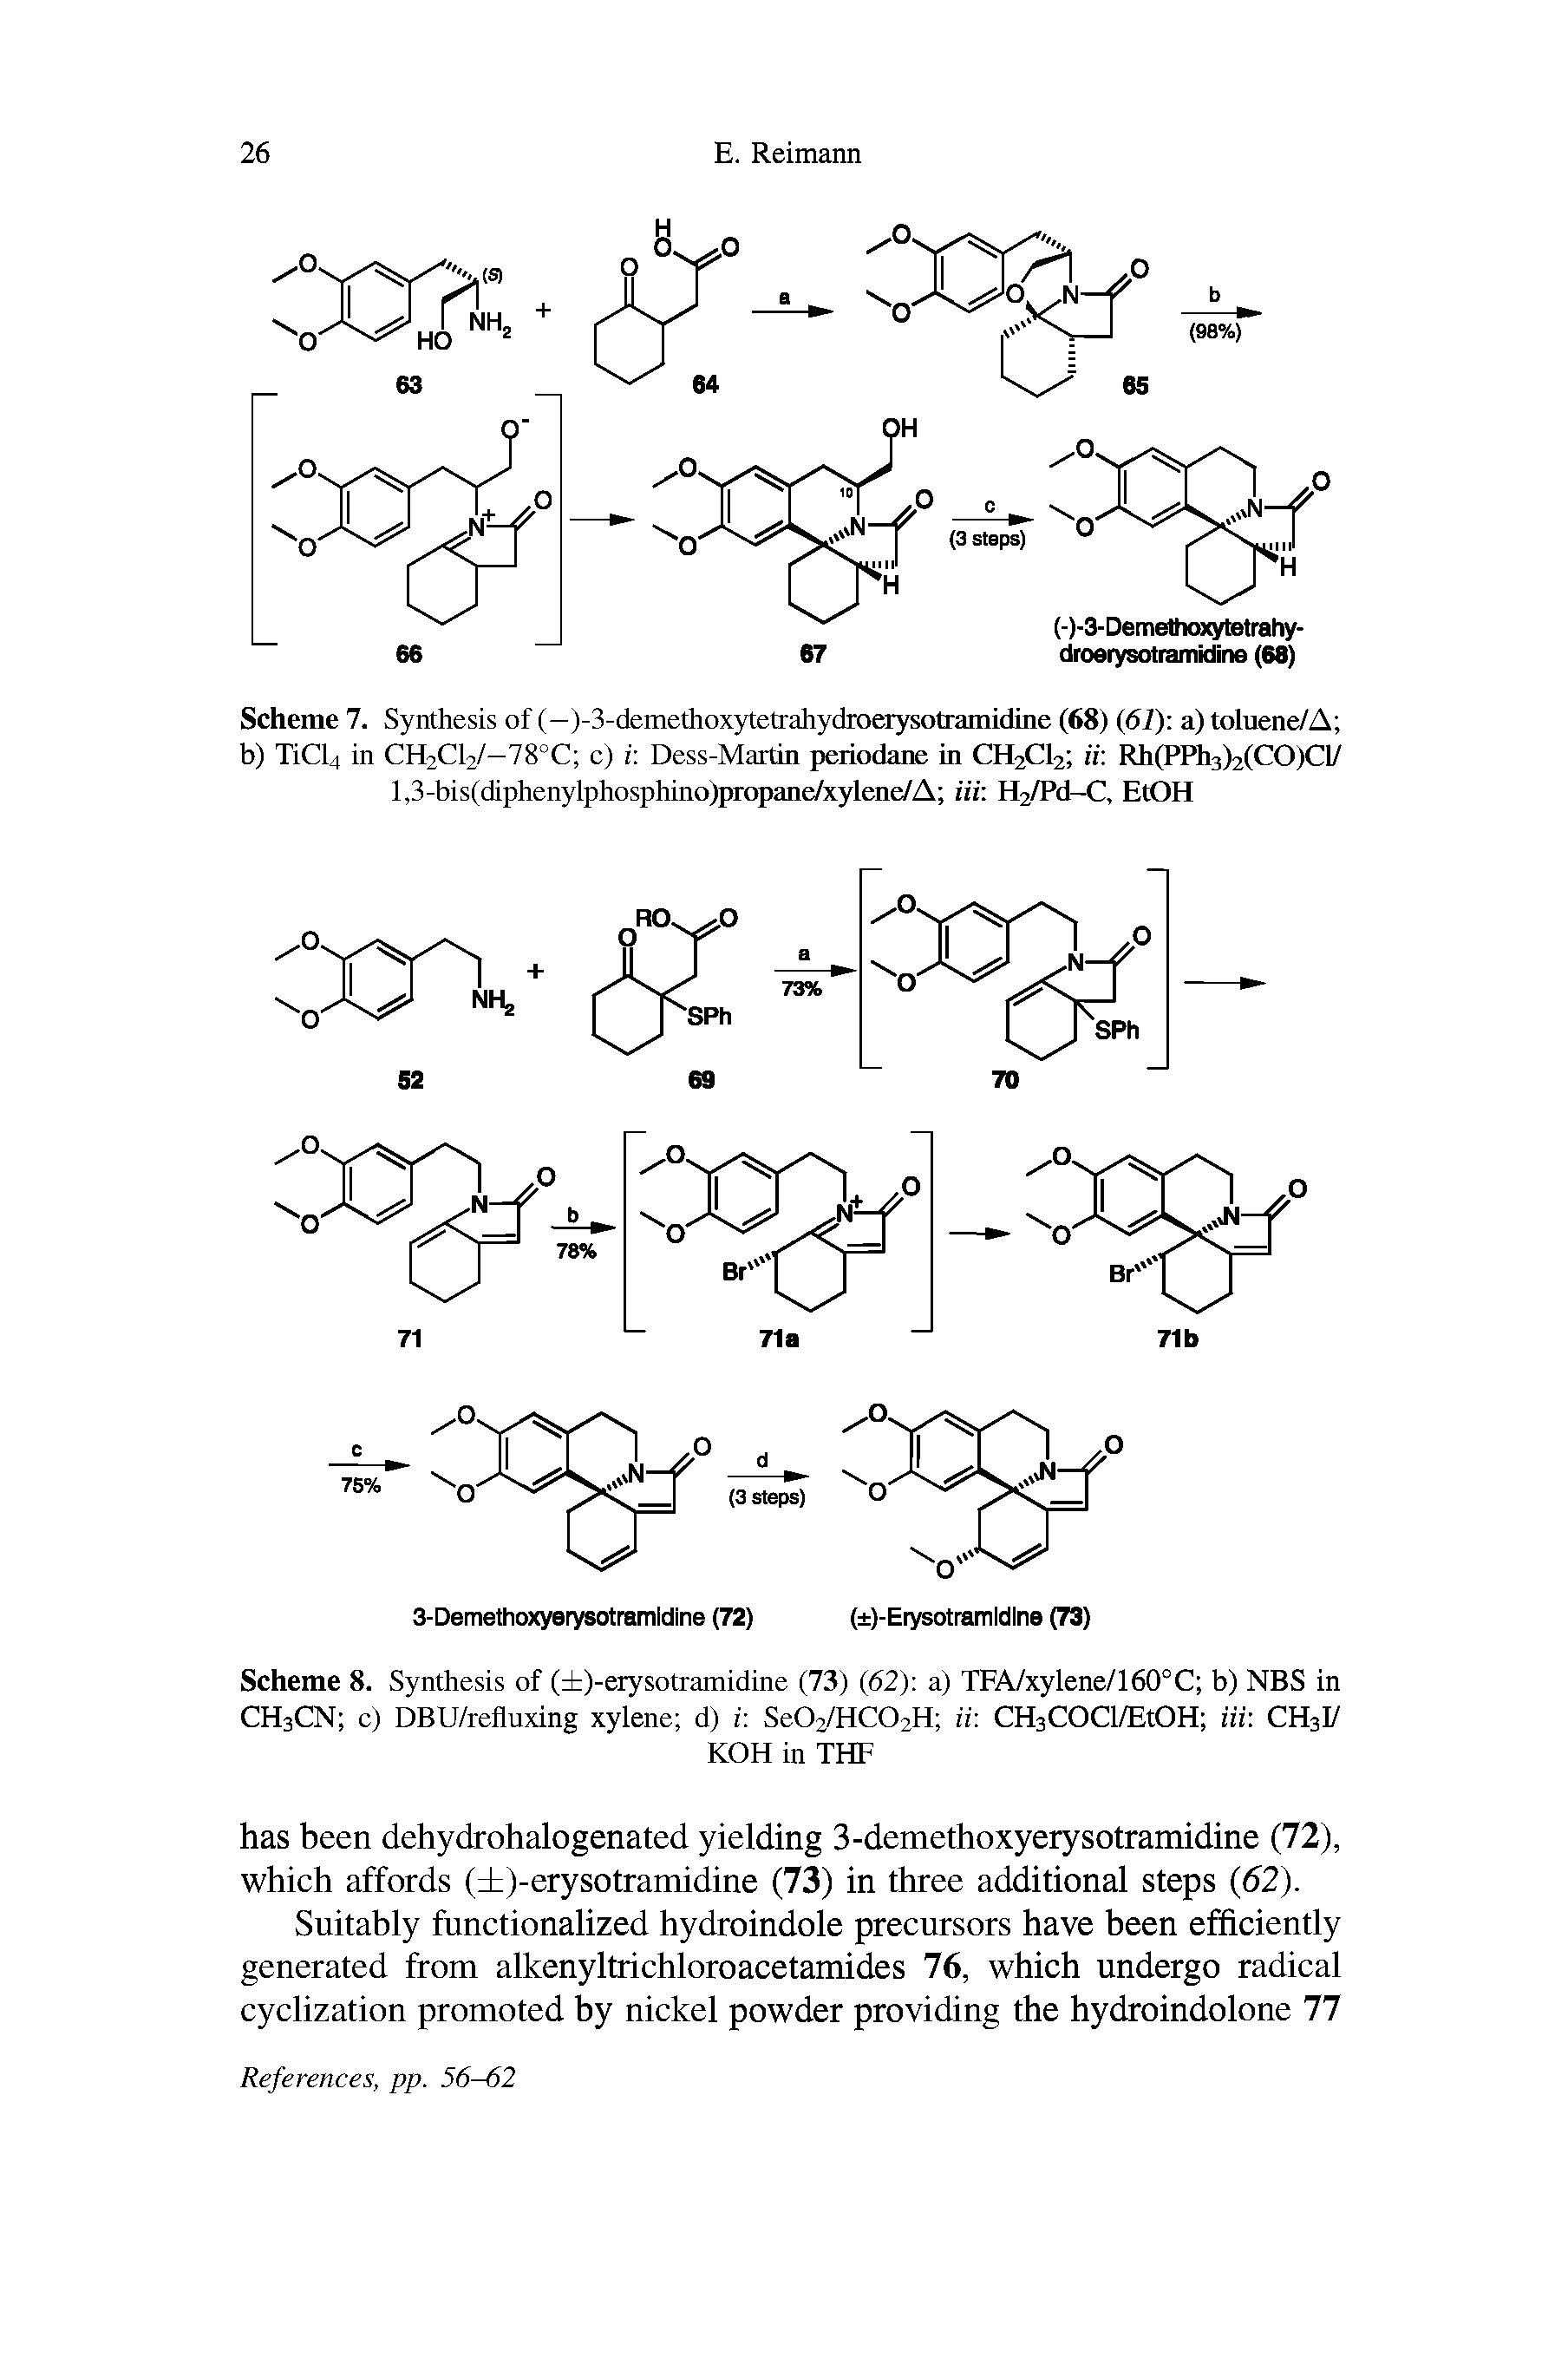 Scheme 7. Synthesis of (—)-3-demethoxytetrahydroeiysotramidine (68) (61) a) toluene/A b) XiCl4 in CH2CI2/—78°C c) i Dess-Martin periodane in CH2CI2 ii Rh(PPh3)2(CO)Cl/ l,3-bis(diphenylphosphino)propane/xylene/A in H2/Pd-C, EtOH...